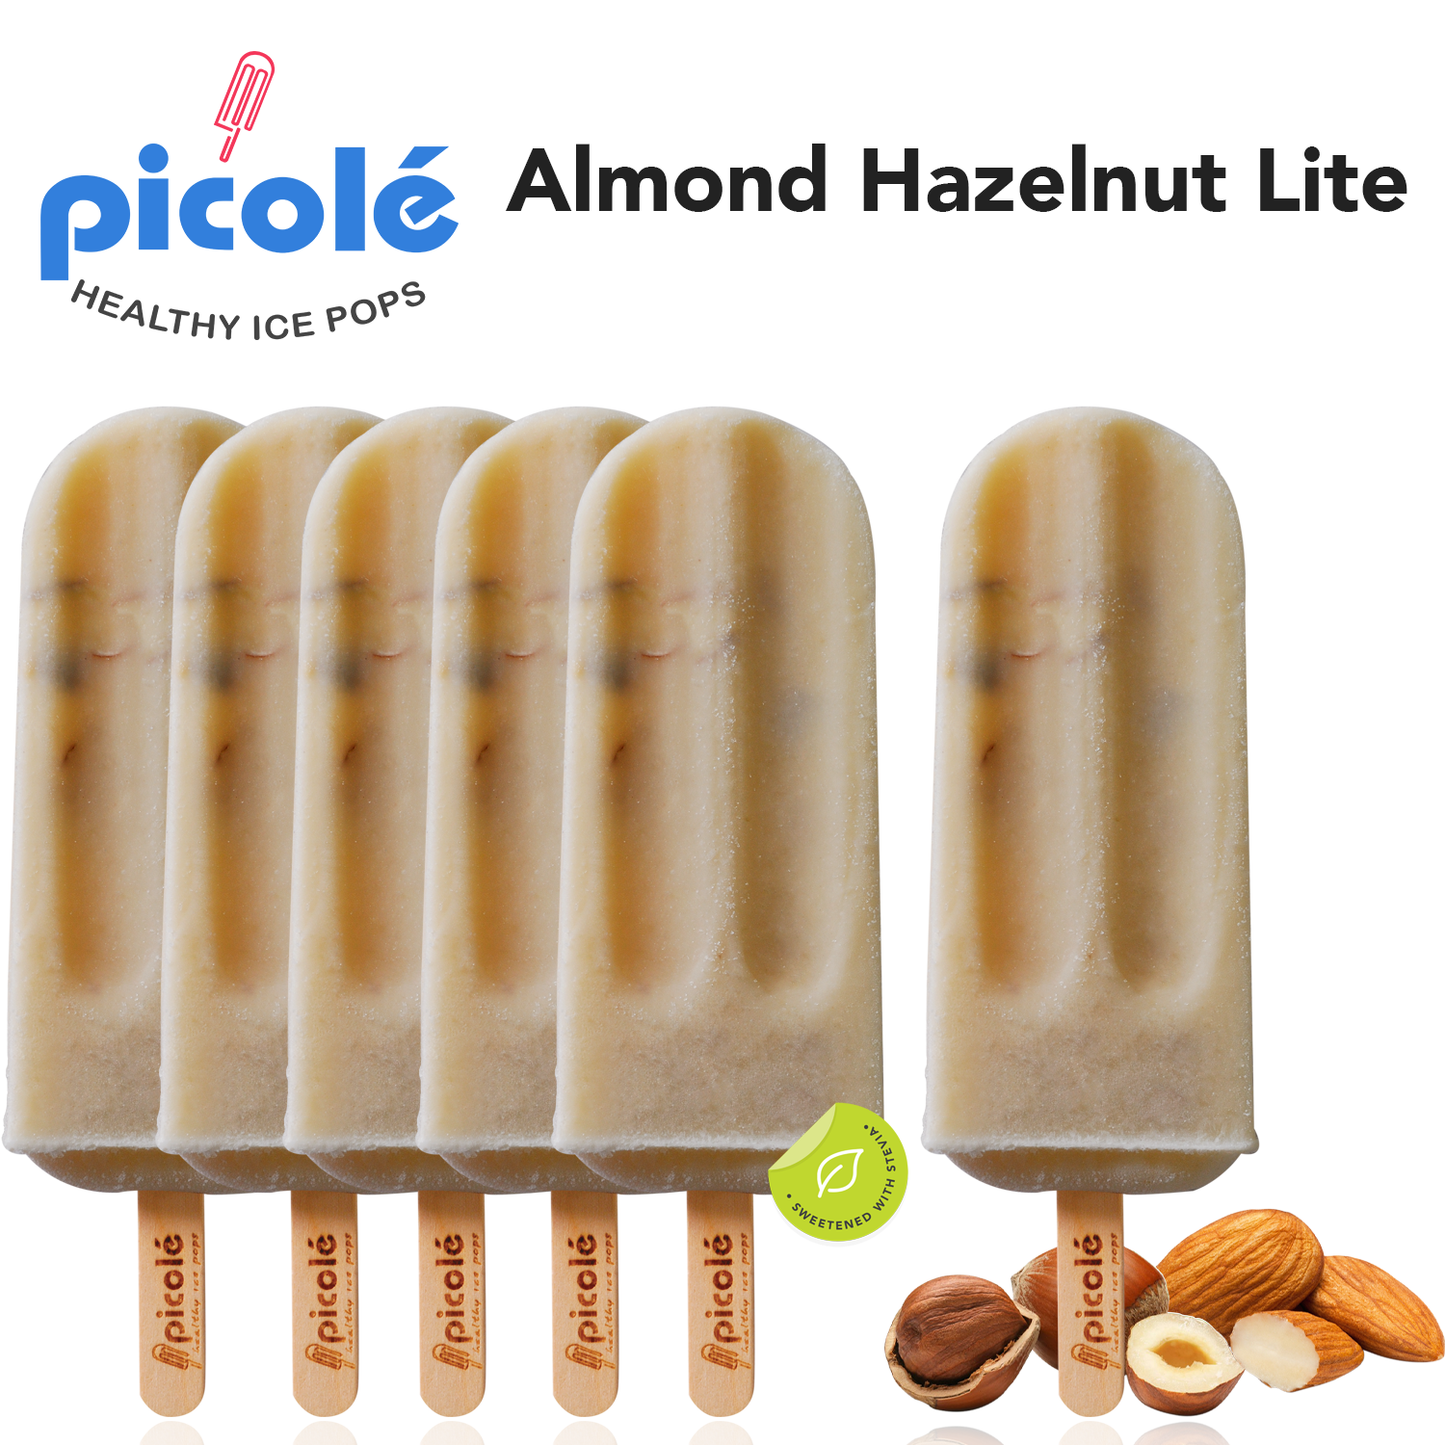 Picole Healthy Ice Pops